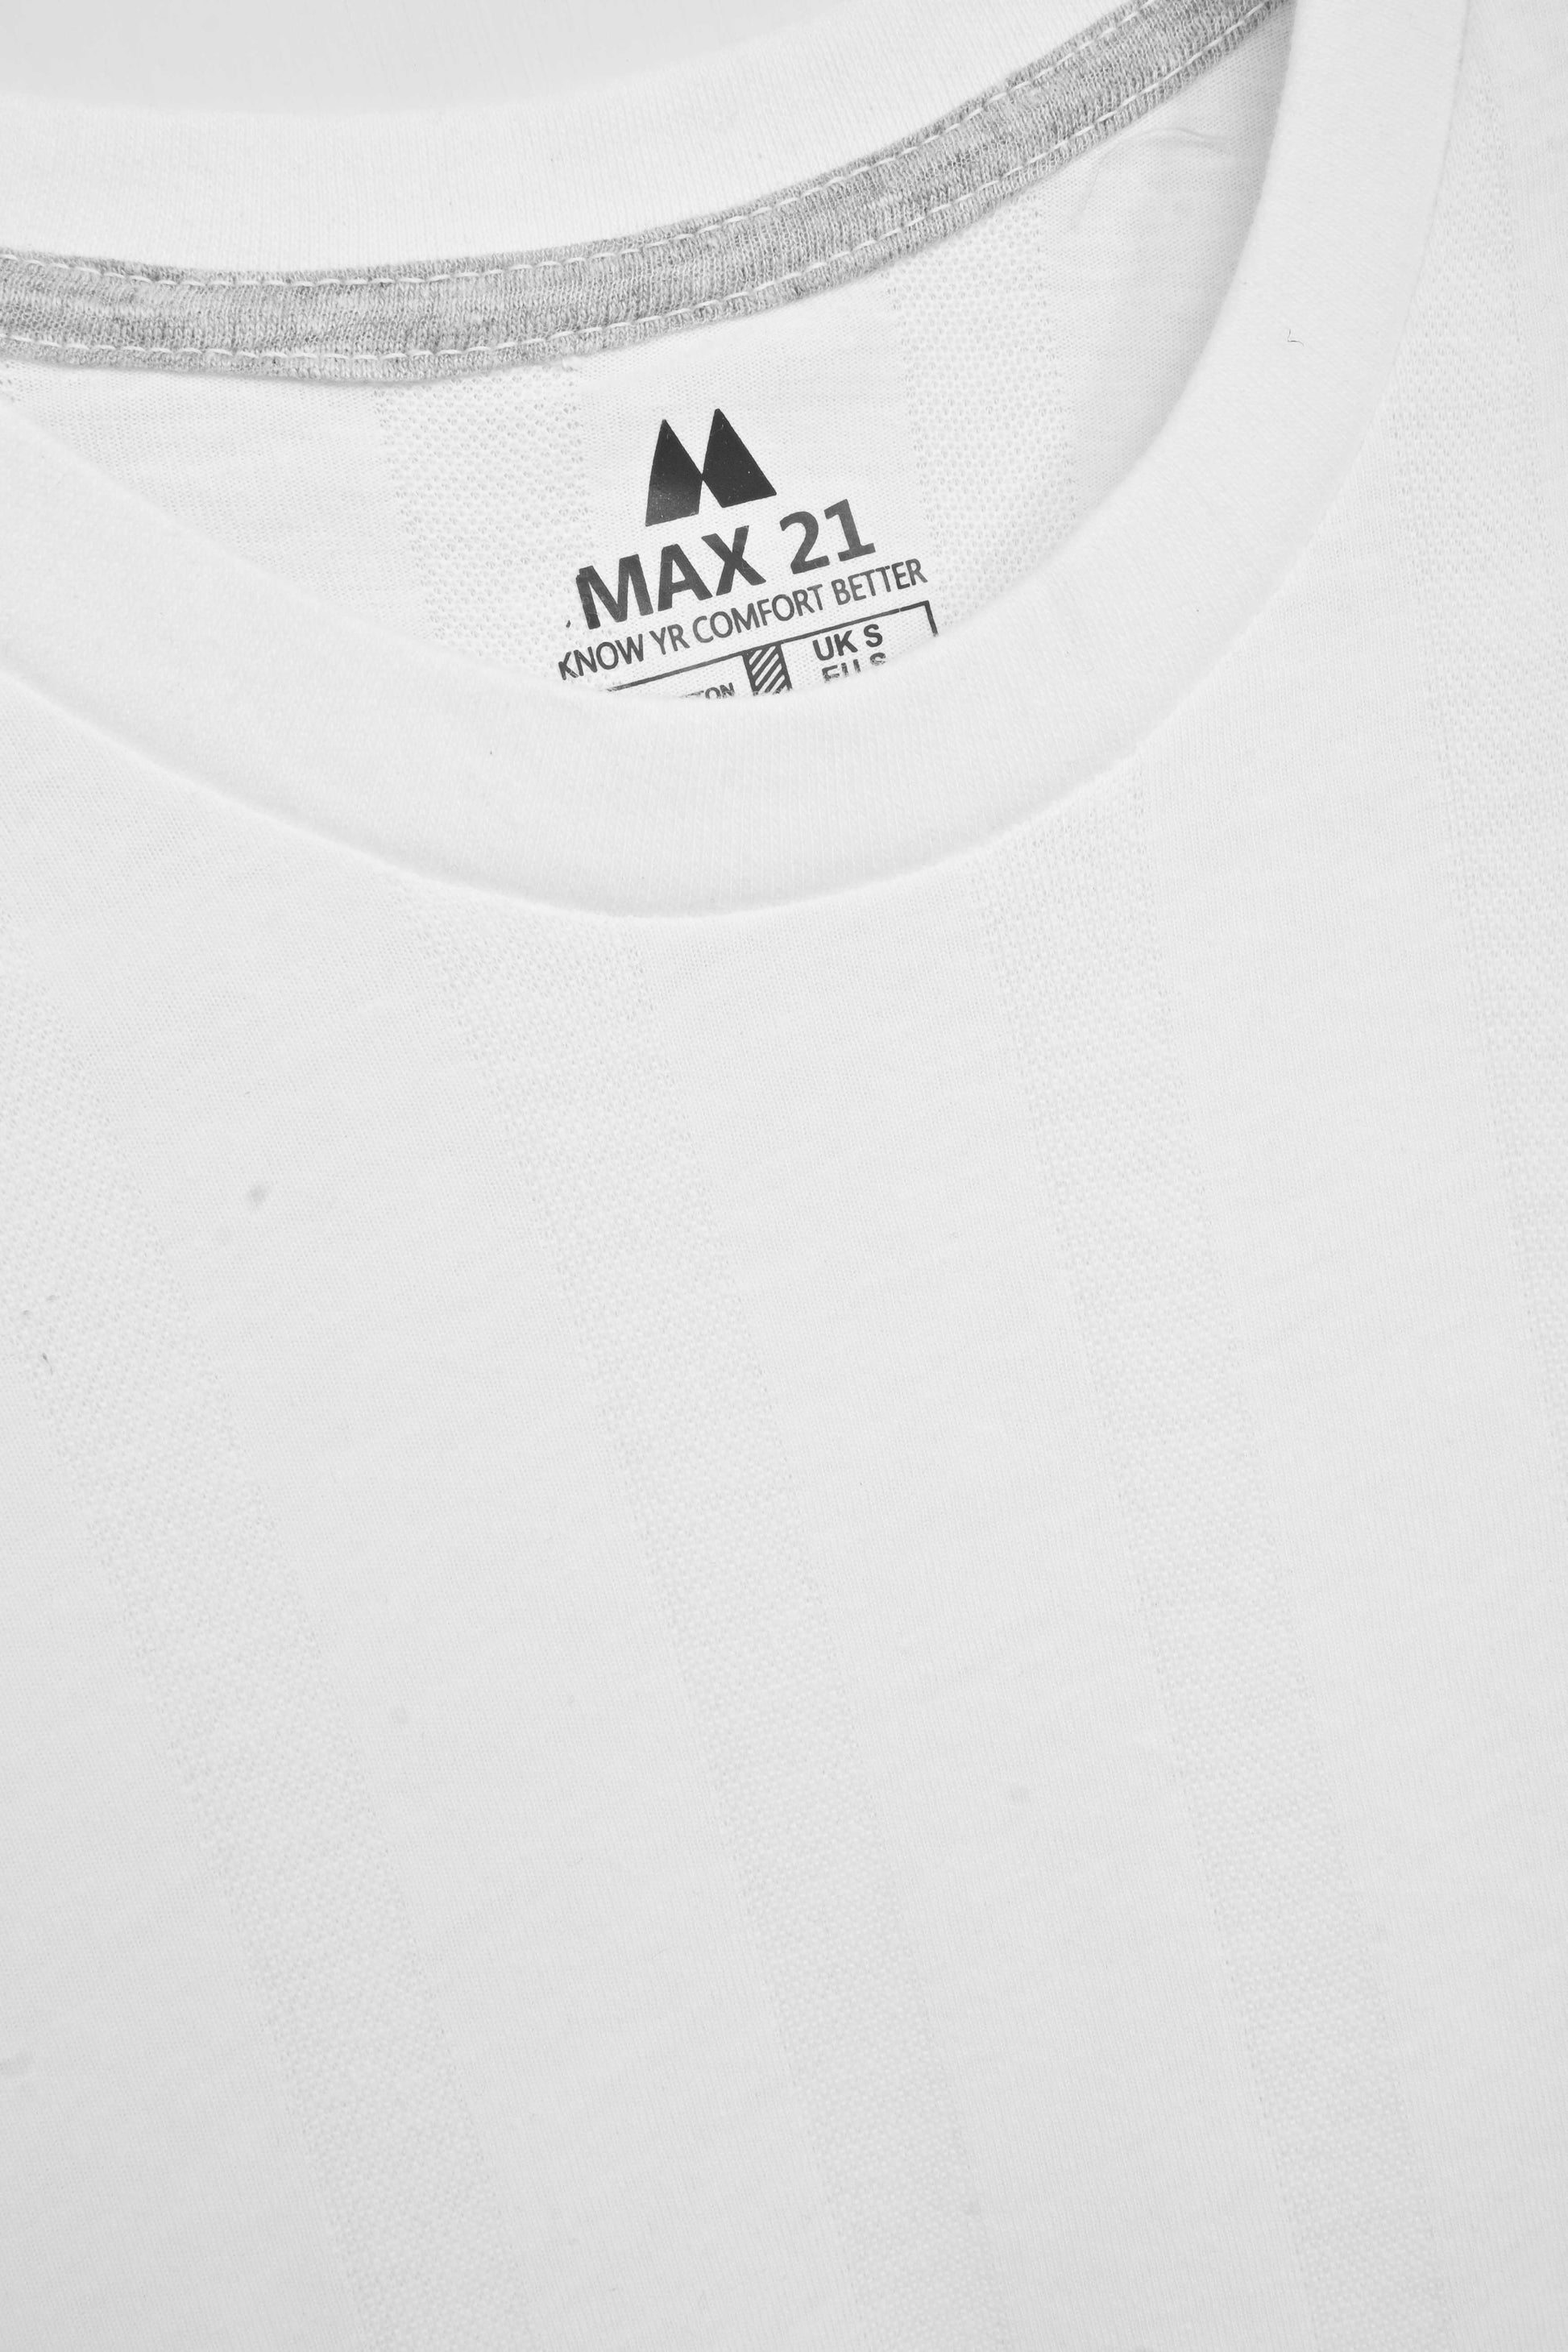 Max 21 Men's Grafton Design Classic Tee Shirt Men's Tee Shirt SZK 